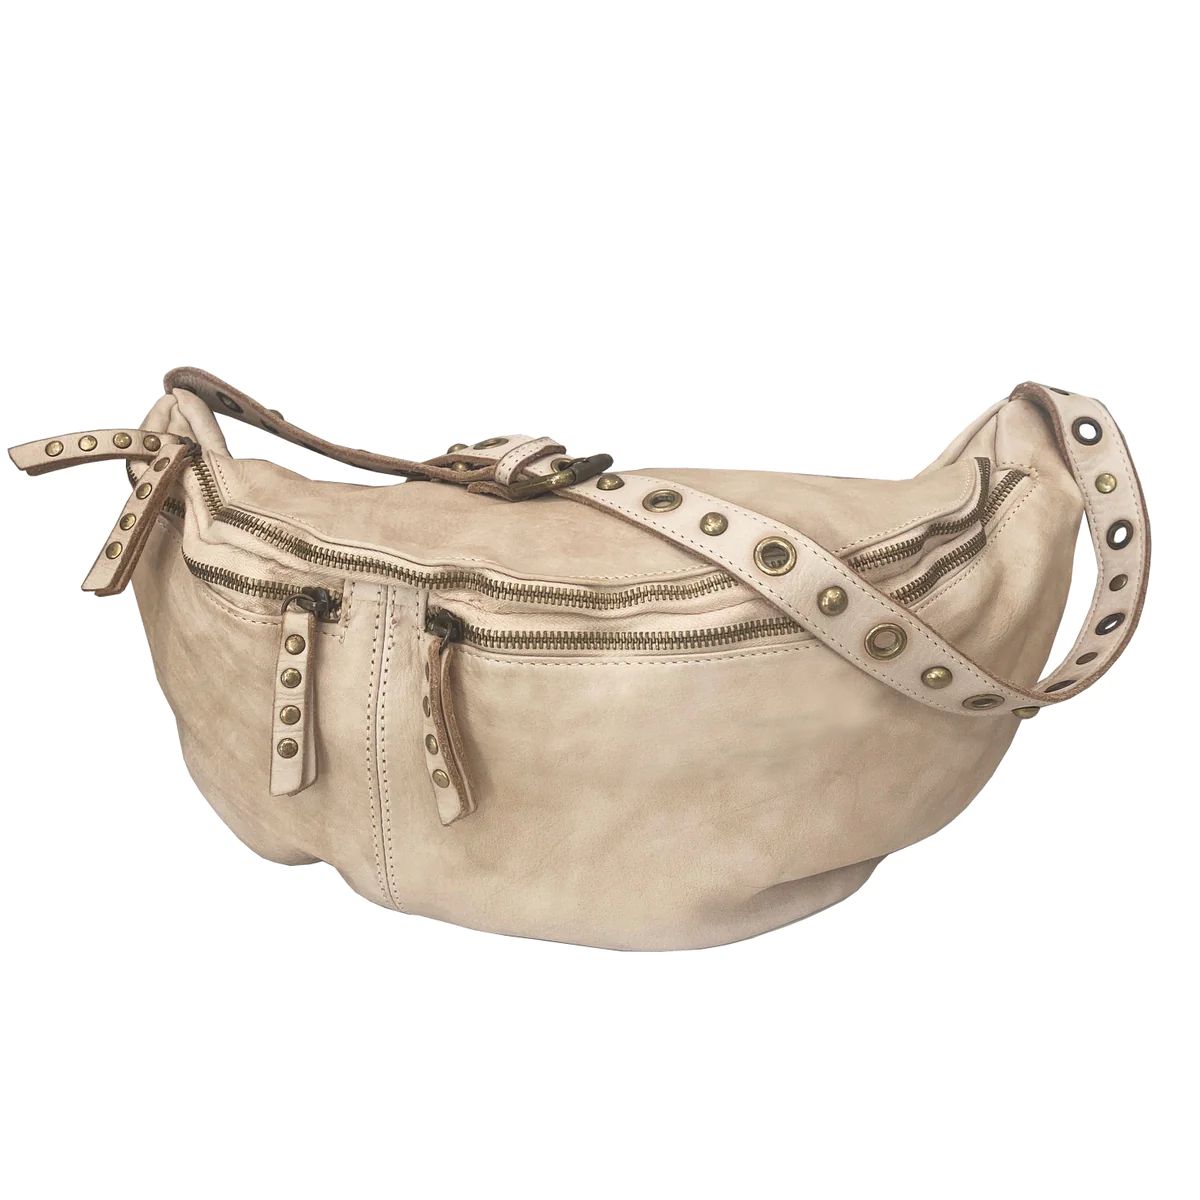 Bella Large Sling in Bone | Bolsa Nova Handbags